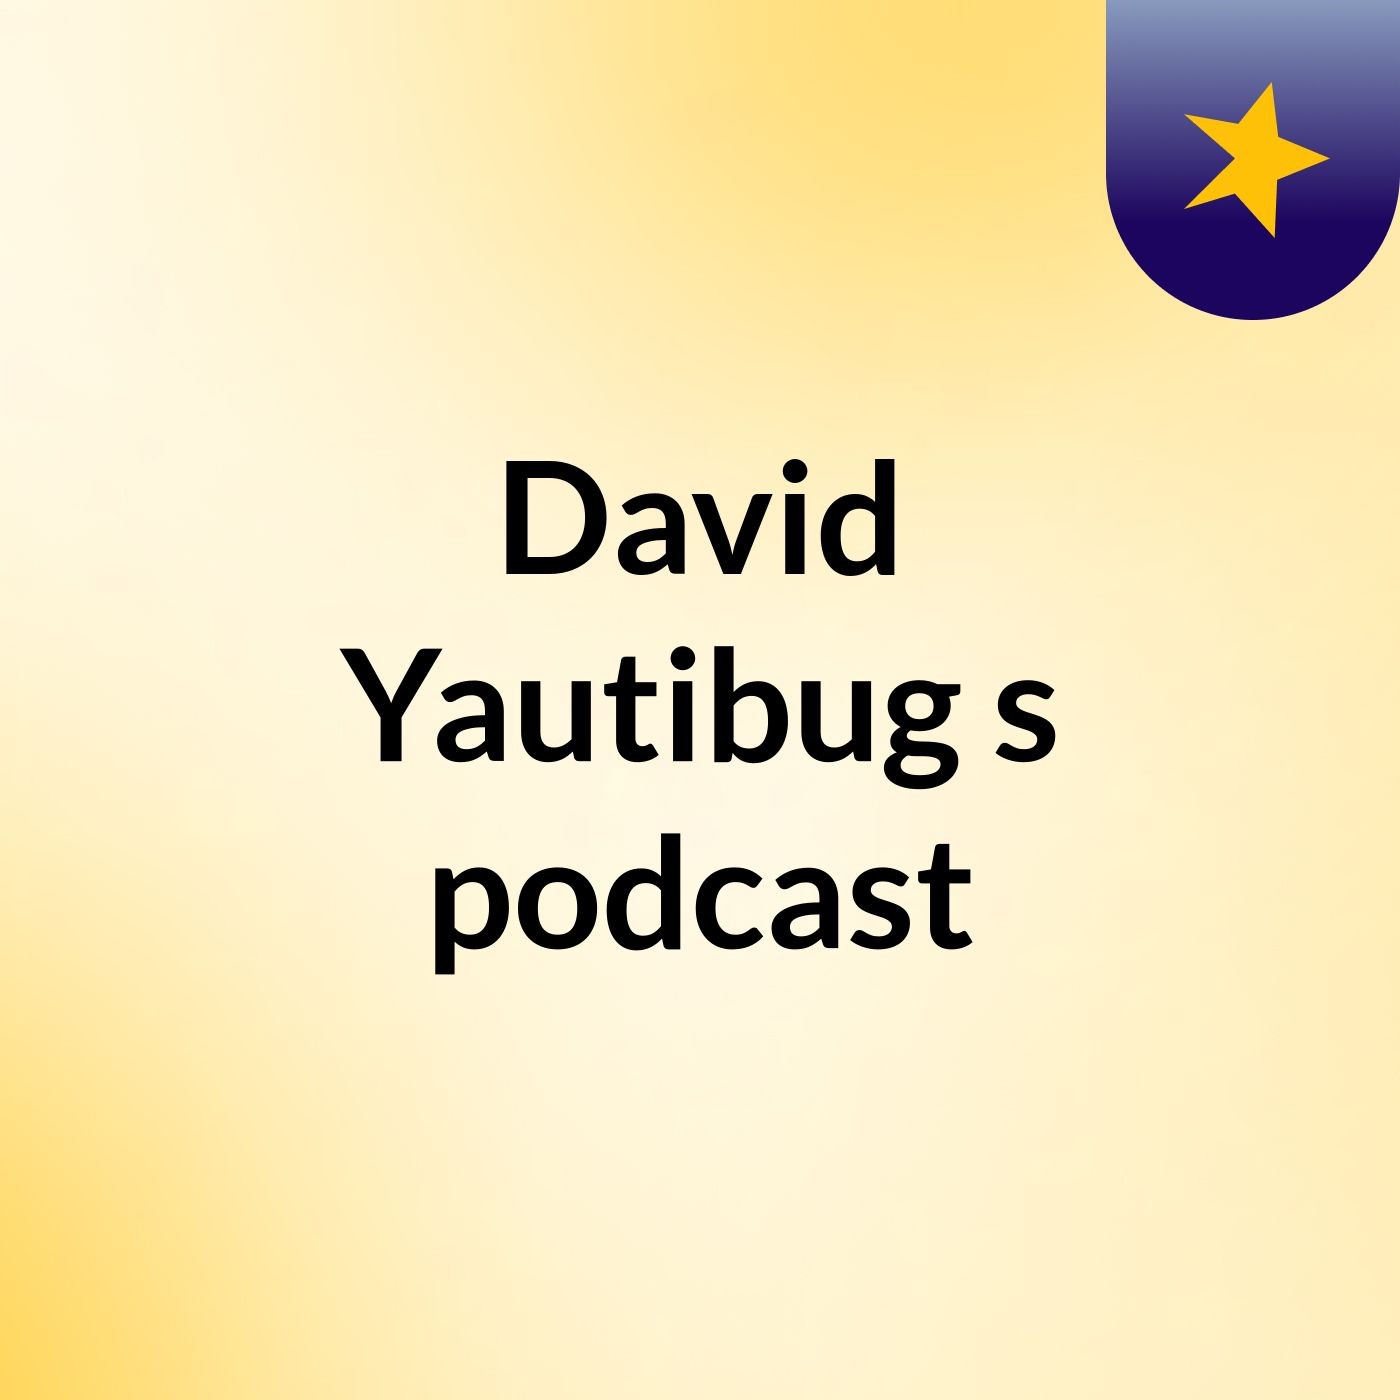 David Yautibug's podcast